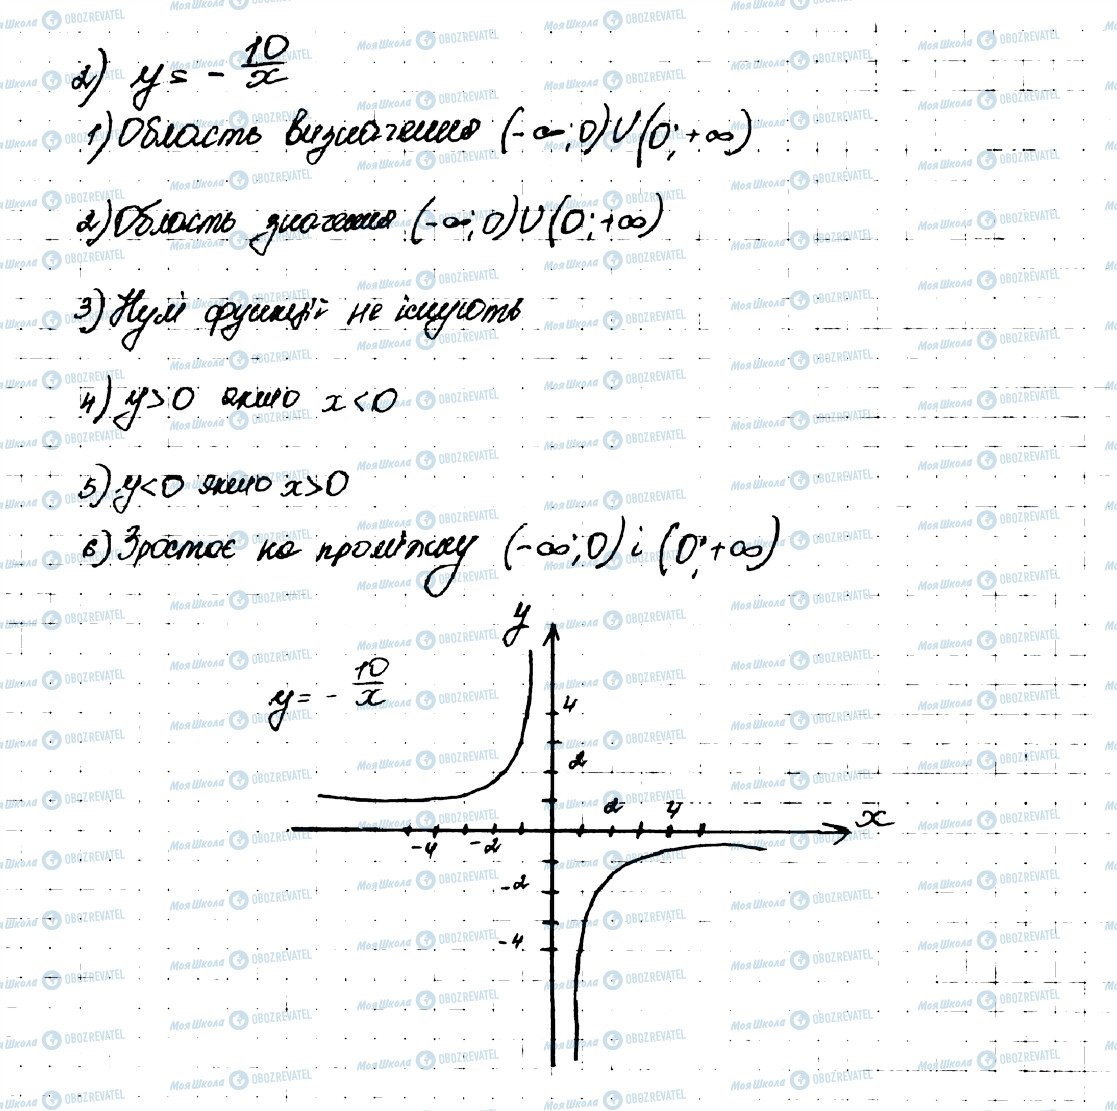 ГДЗ Алгебра 9 клас сторінка 377